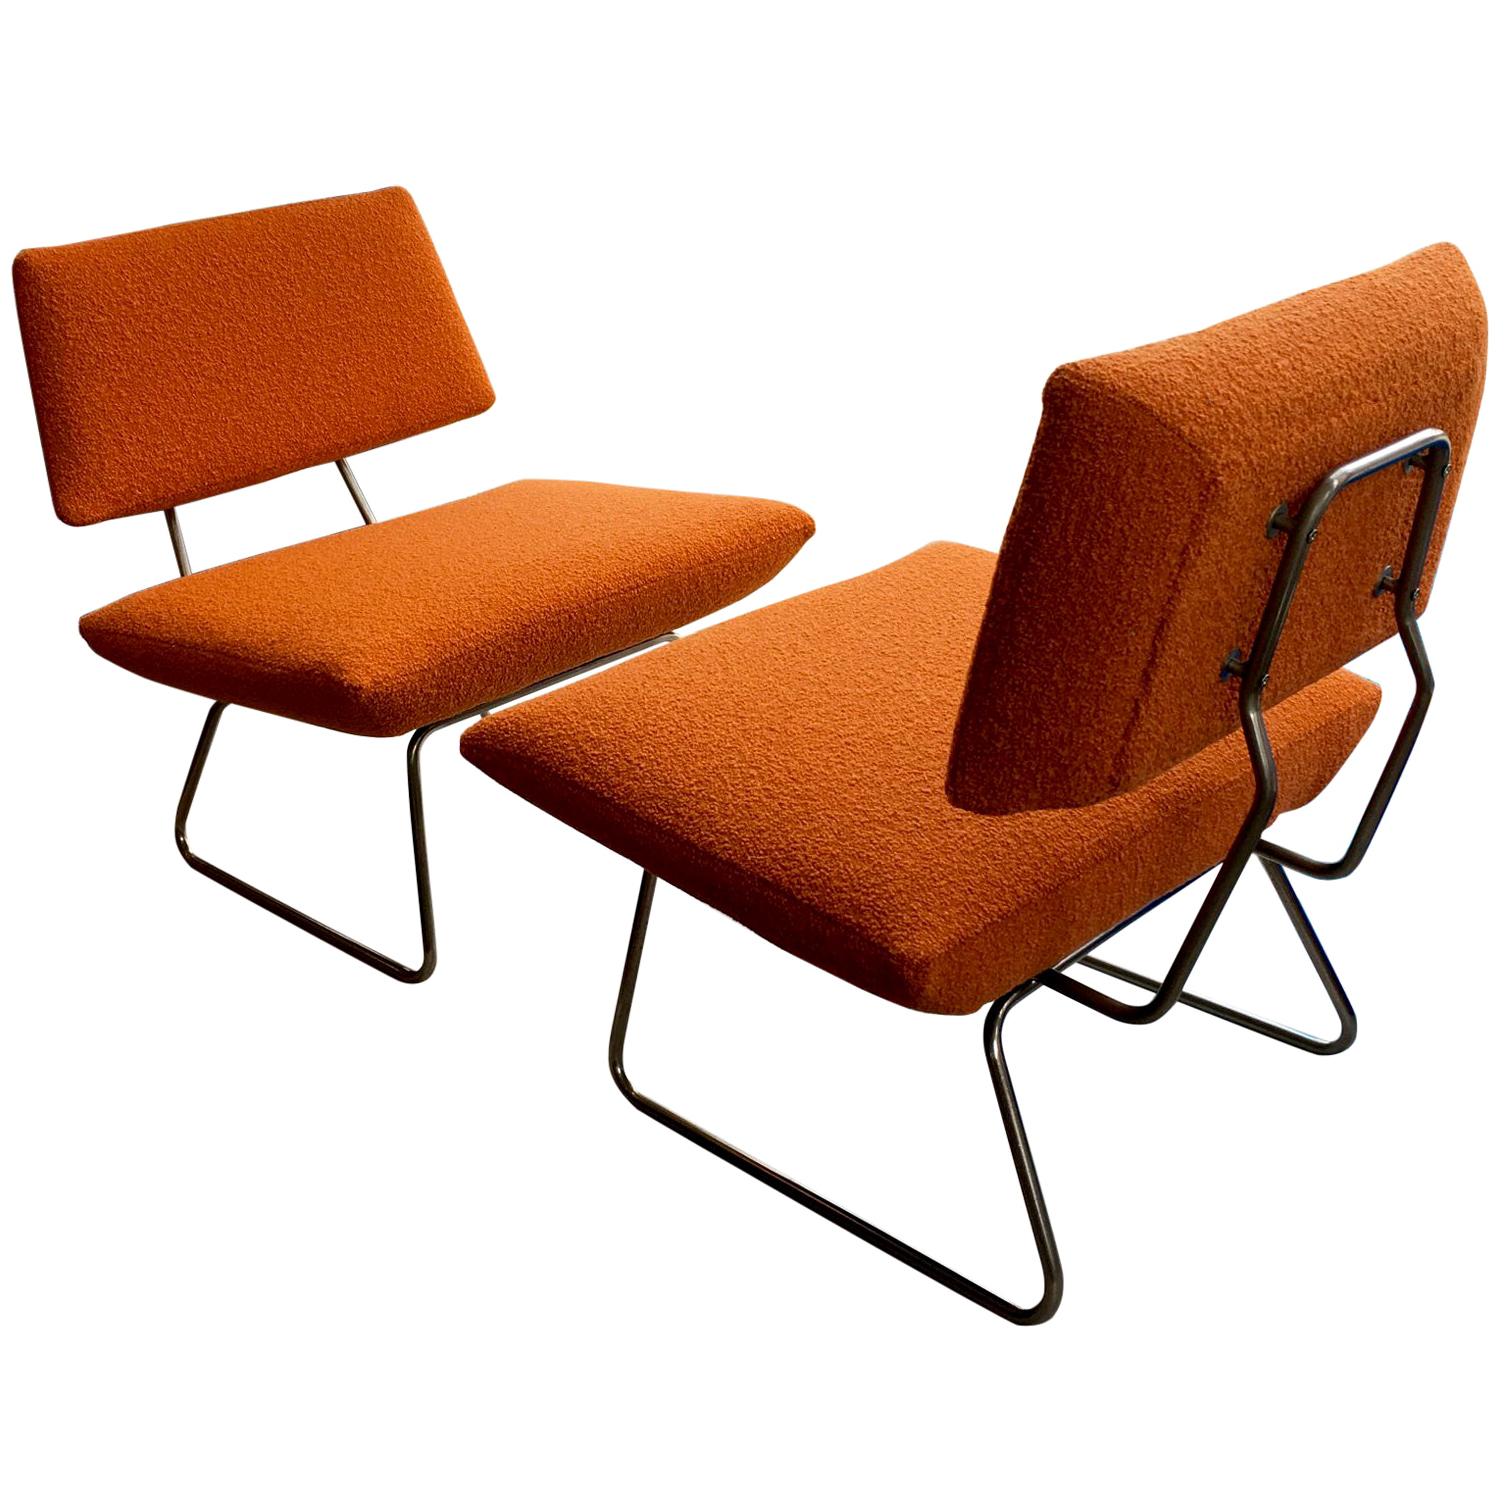 Pair of Midcentury Italian Orange and Chrome Lounge Chairs, Arflex, 1960s